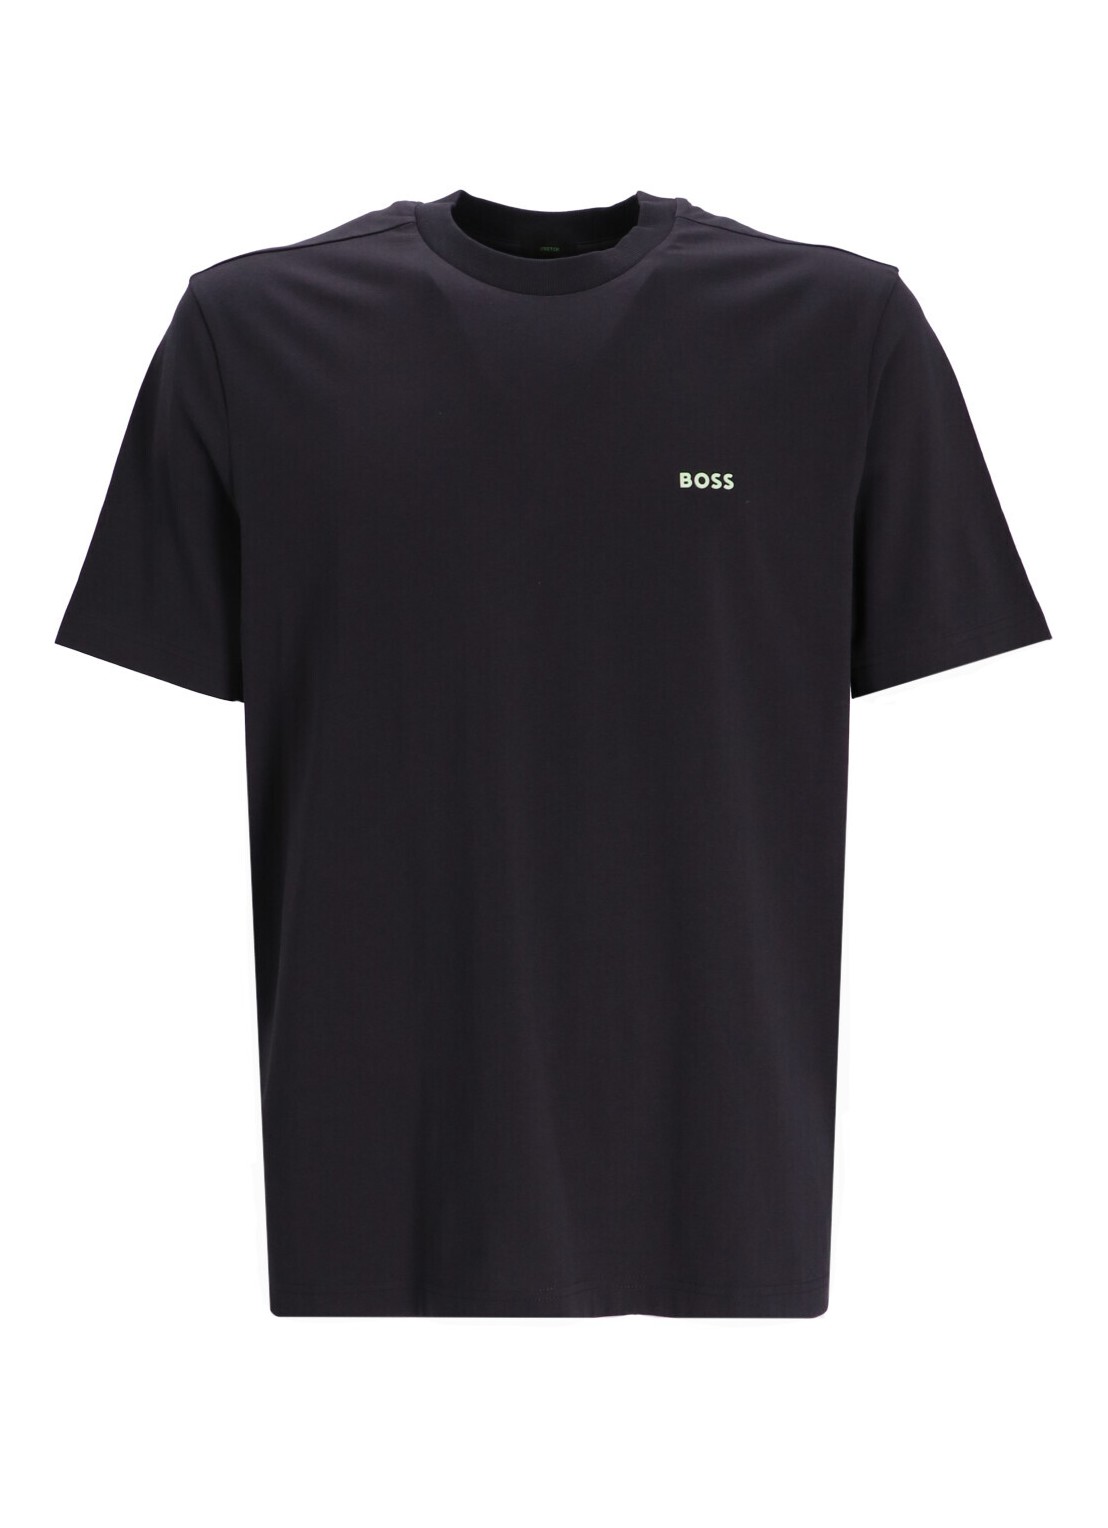 Camiseta boss t-shirt mantee - 50506373 016 talla XL
 